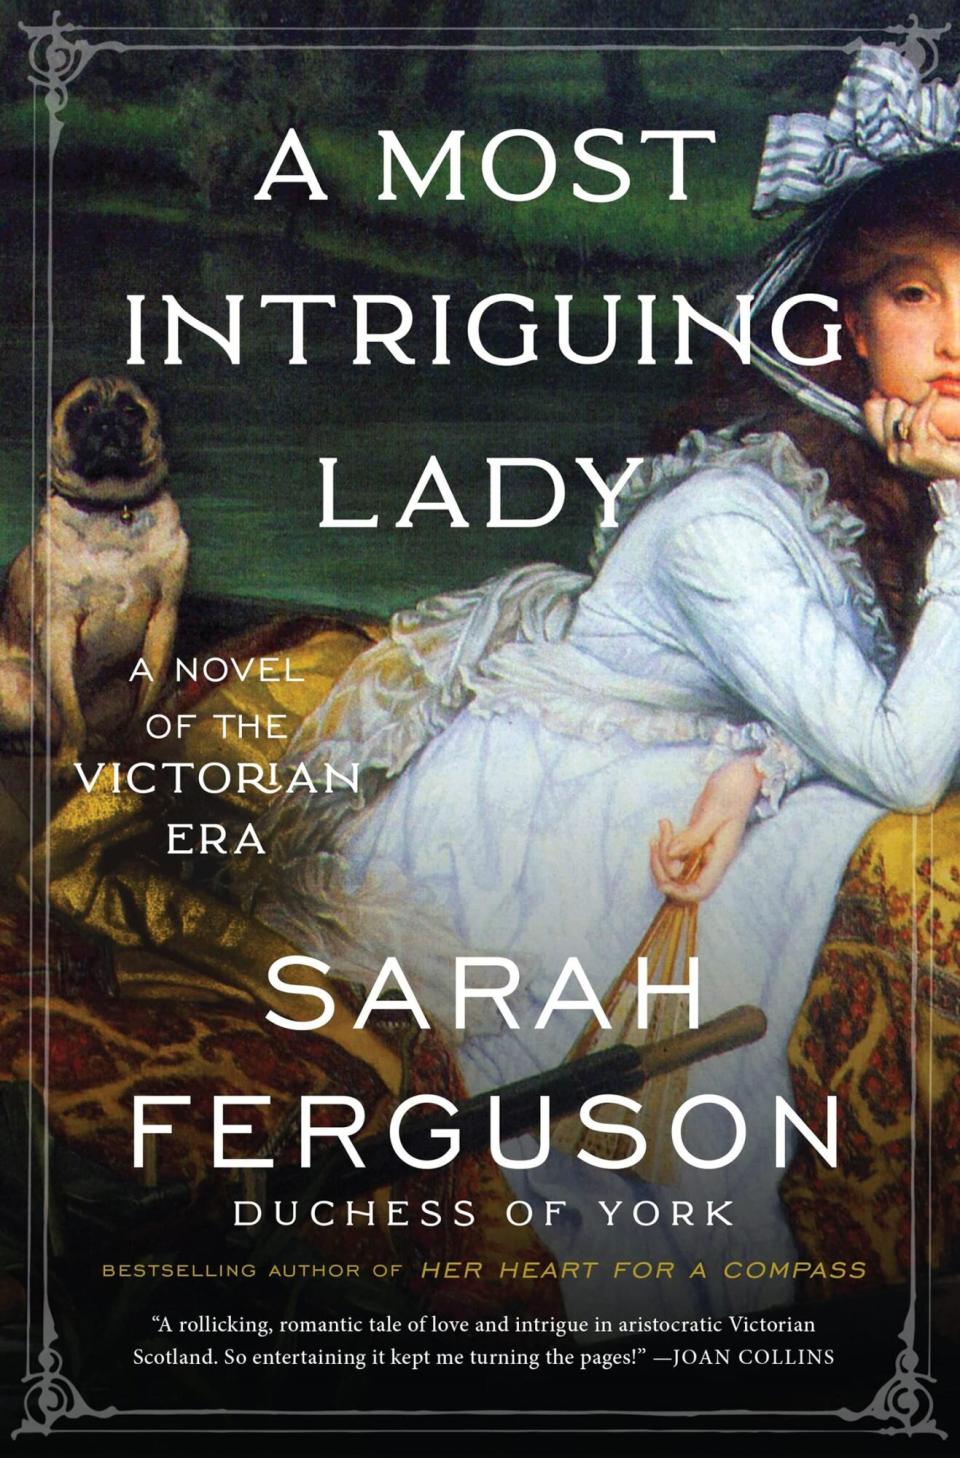 A Most Intriguing Lady: A Novel by Sarah Ferguson